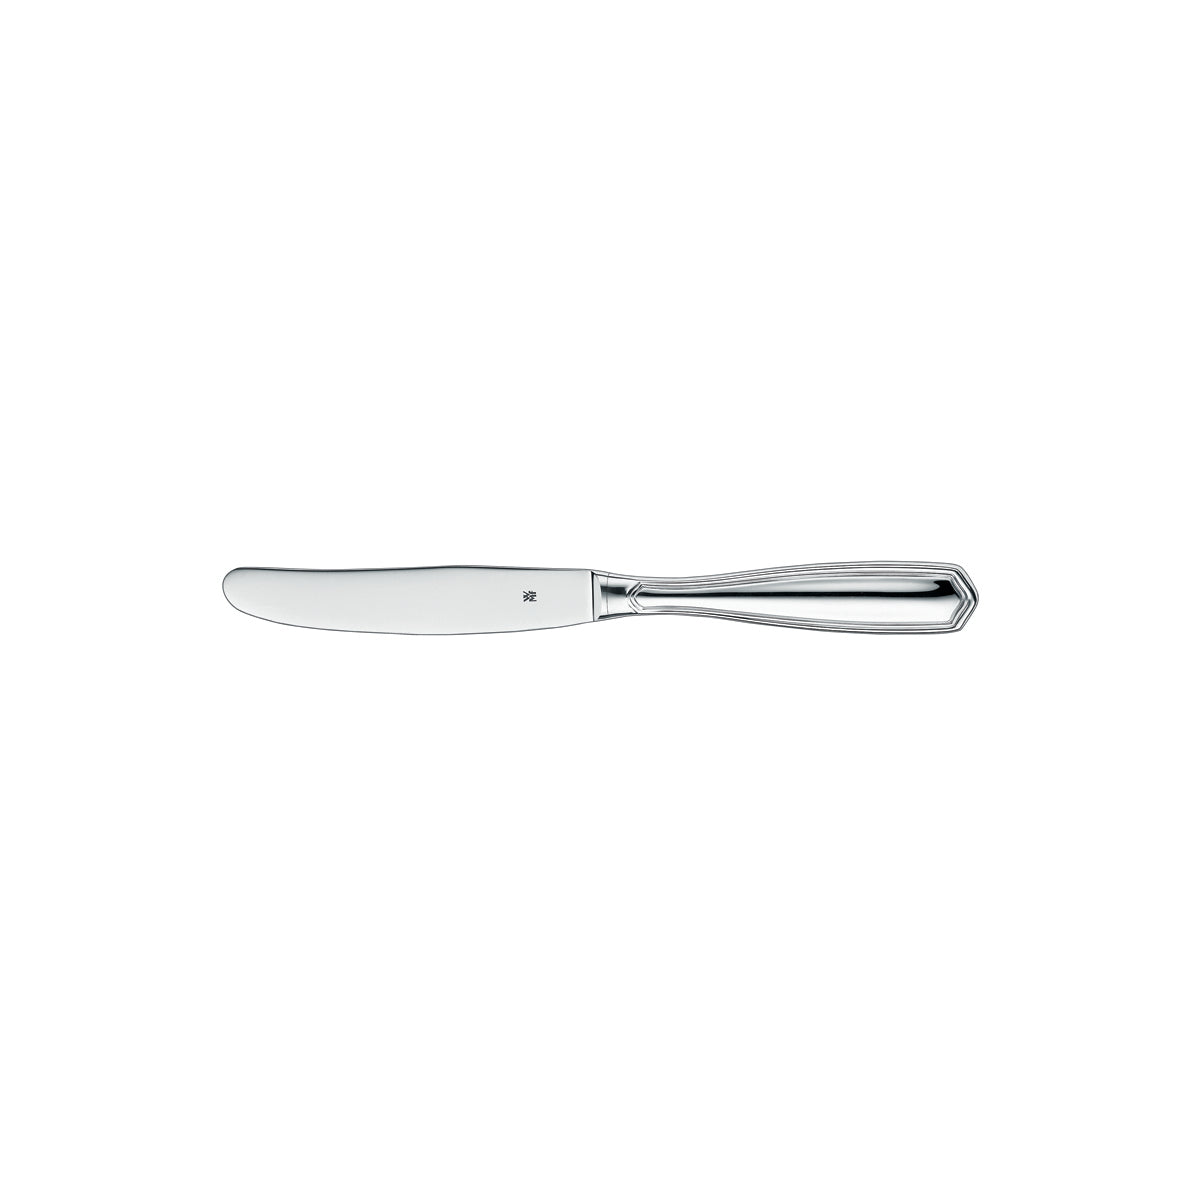 10.4803.6069 WMF Residence Table Knife Silverplated Tomkin Australia Hospitality Supplies